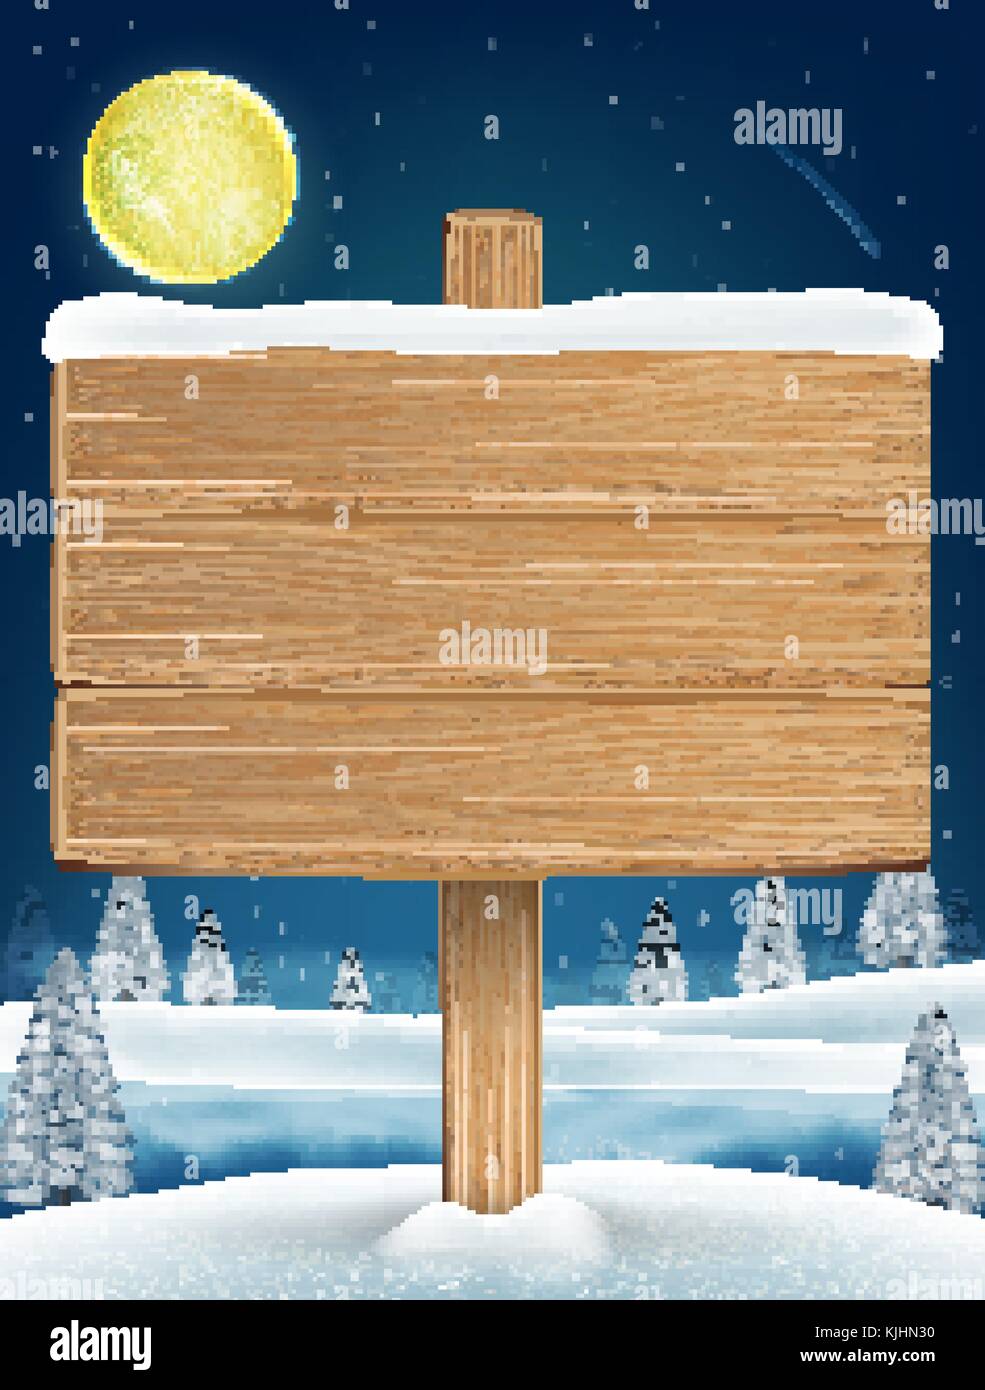 wood board sigh on night christmas winter lake Stock Vector